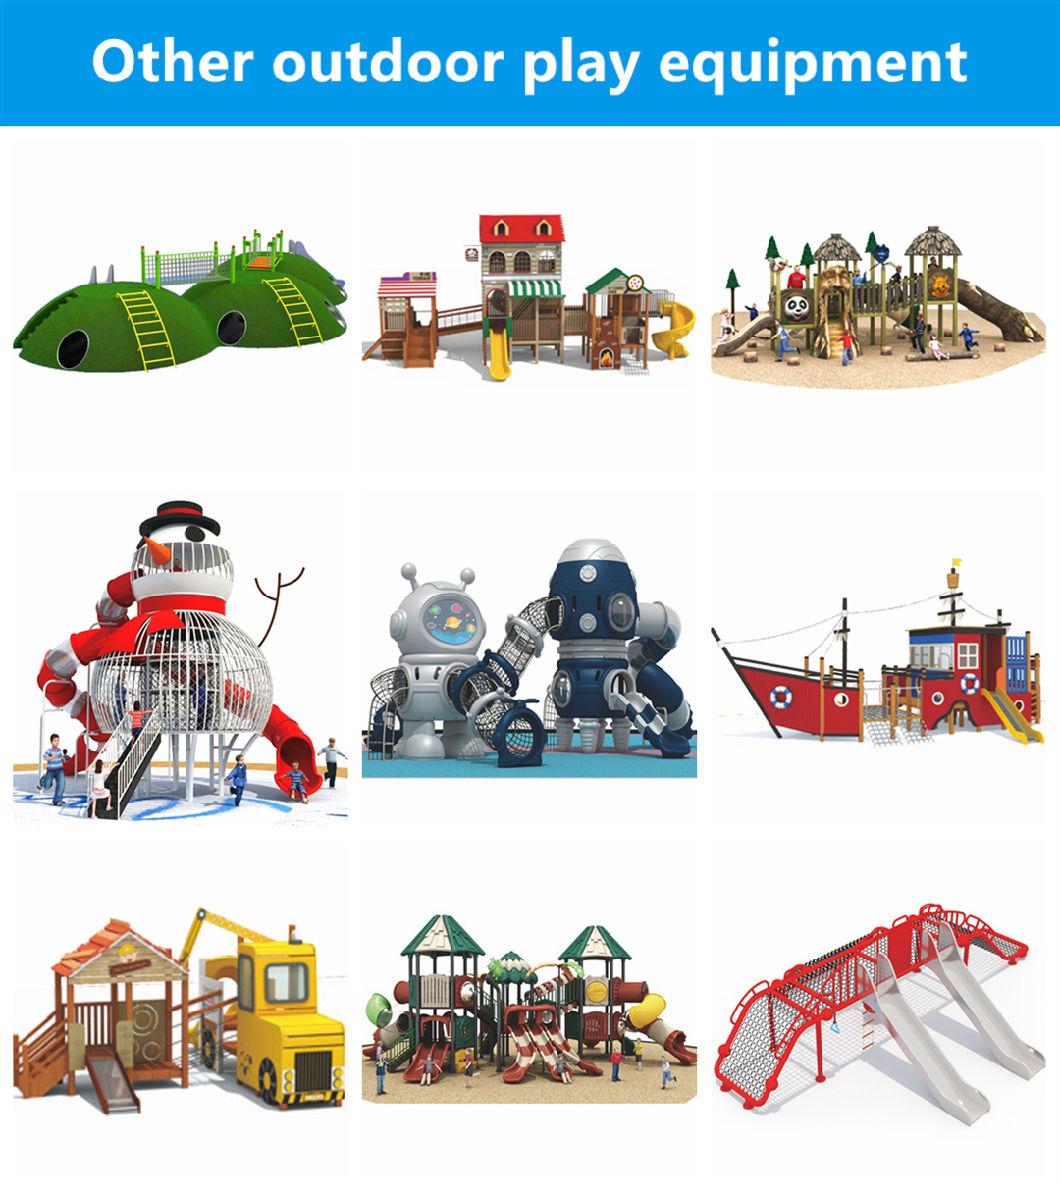 Park Octopus Stainless Steel Slide Community Kids Playground Equipment Fb23